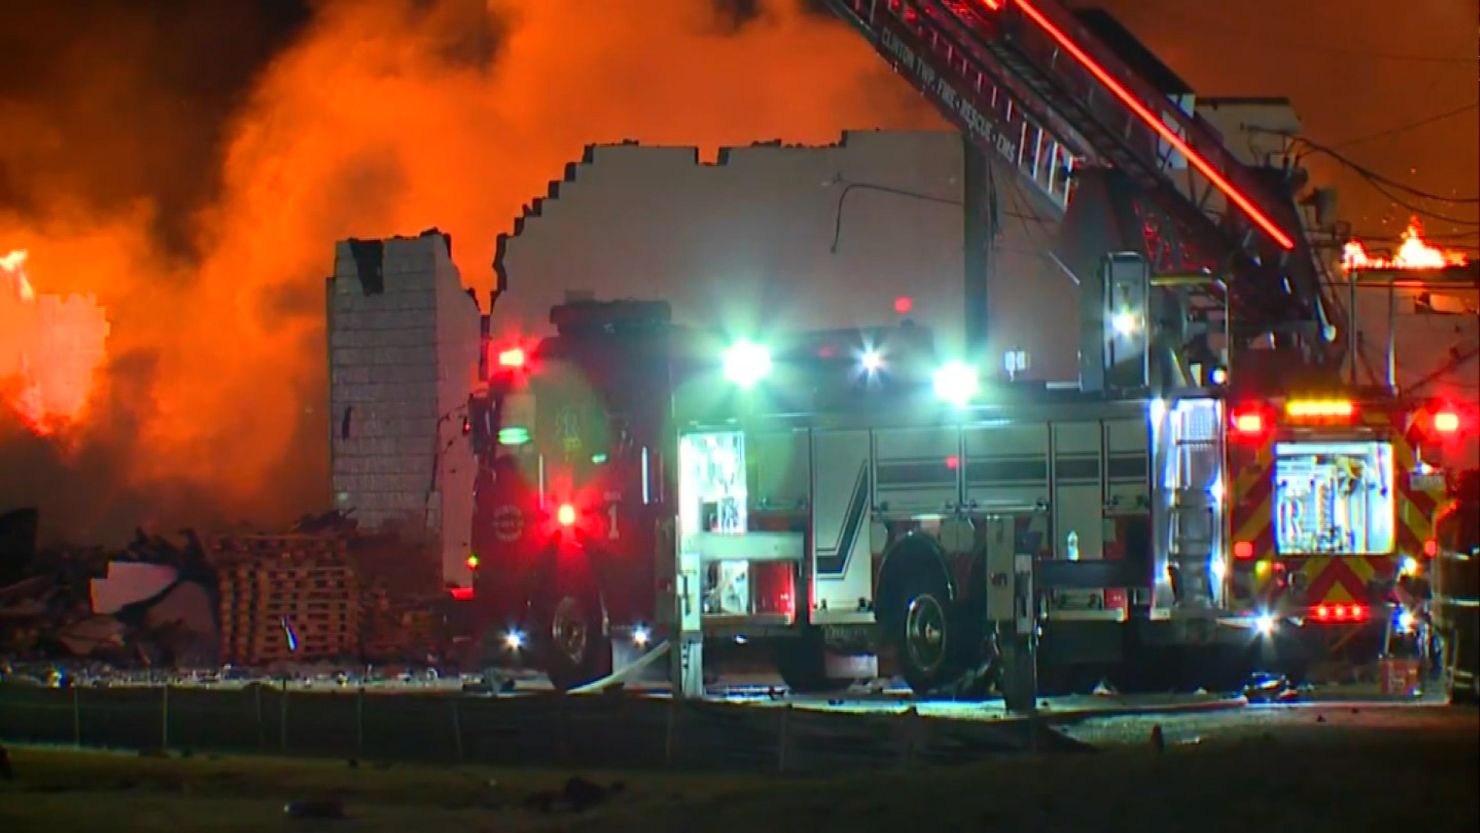 First responders battle a dangerous blaze in Clinton Township, Michigan, Monday night.